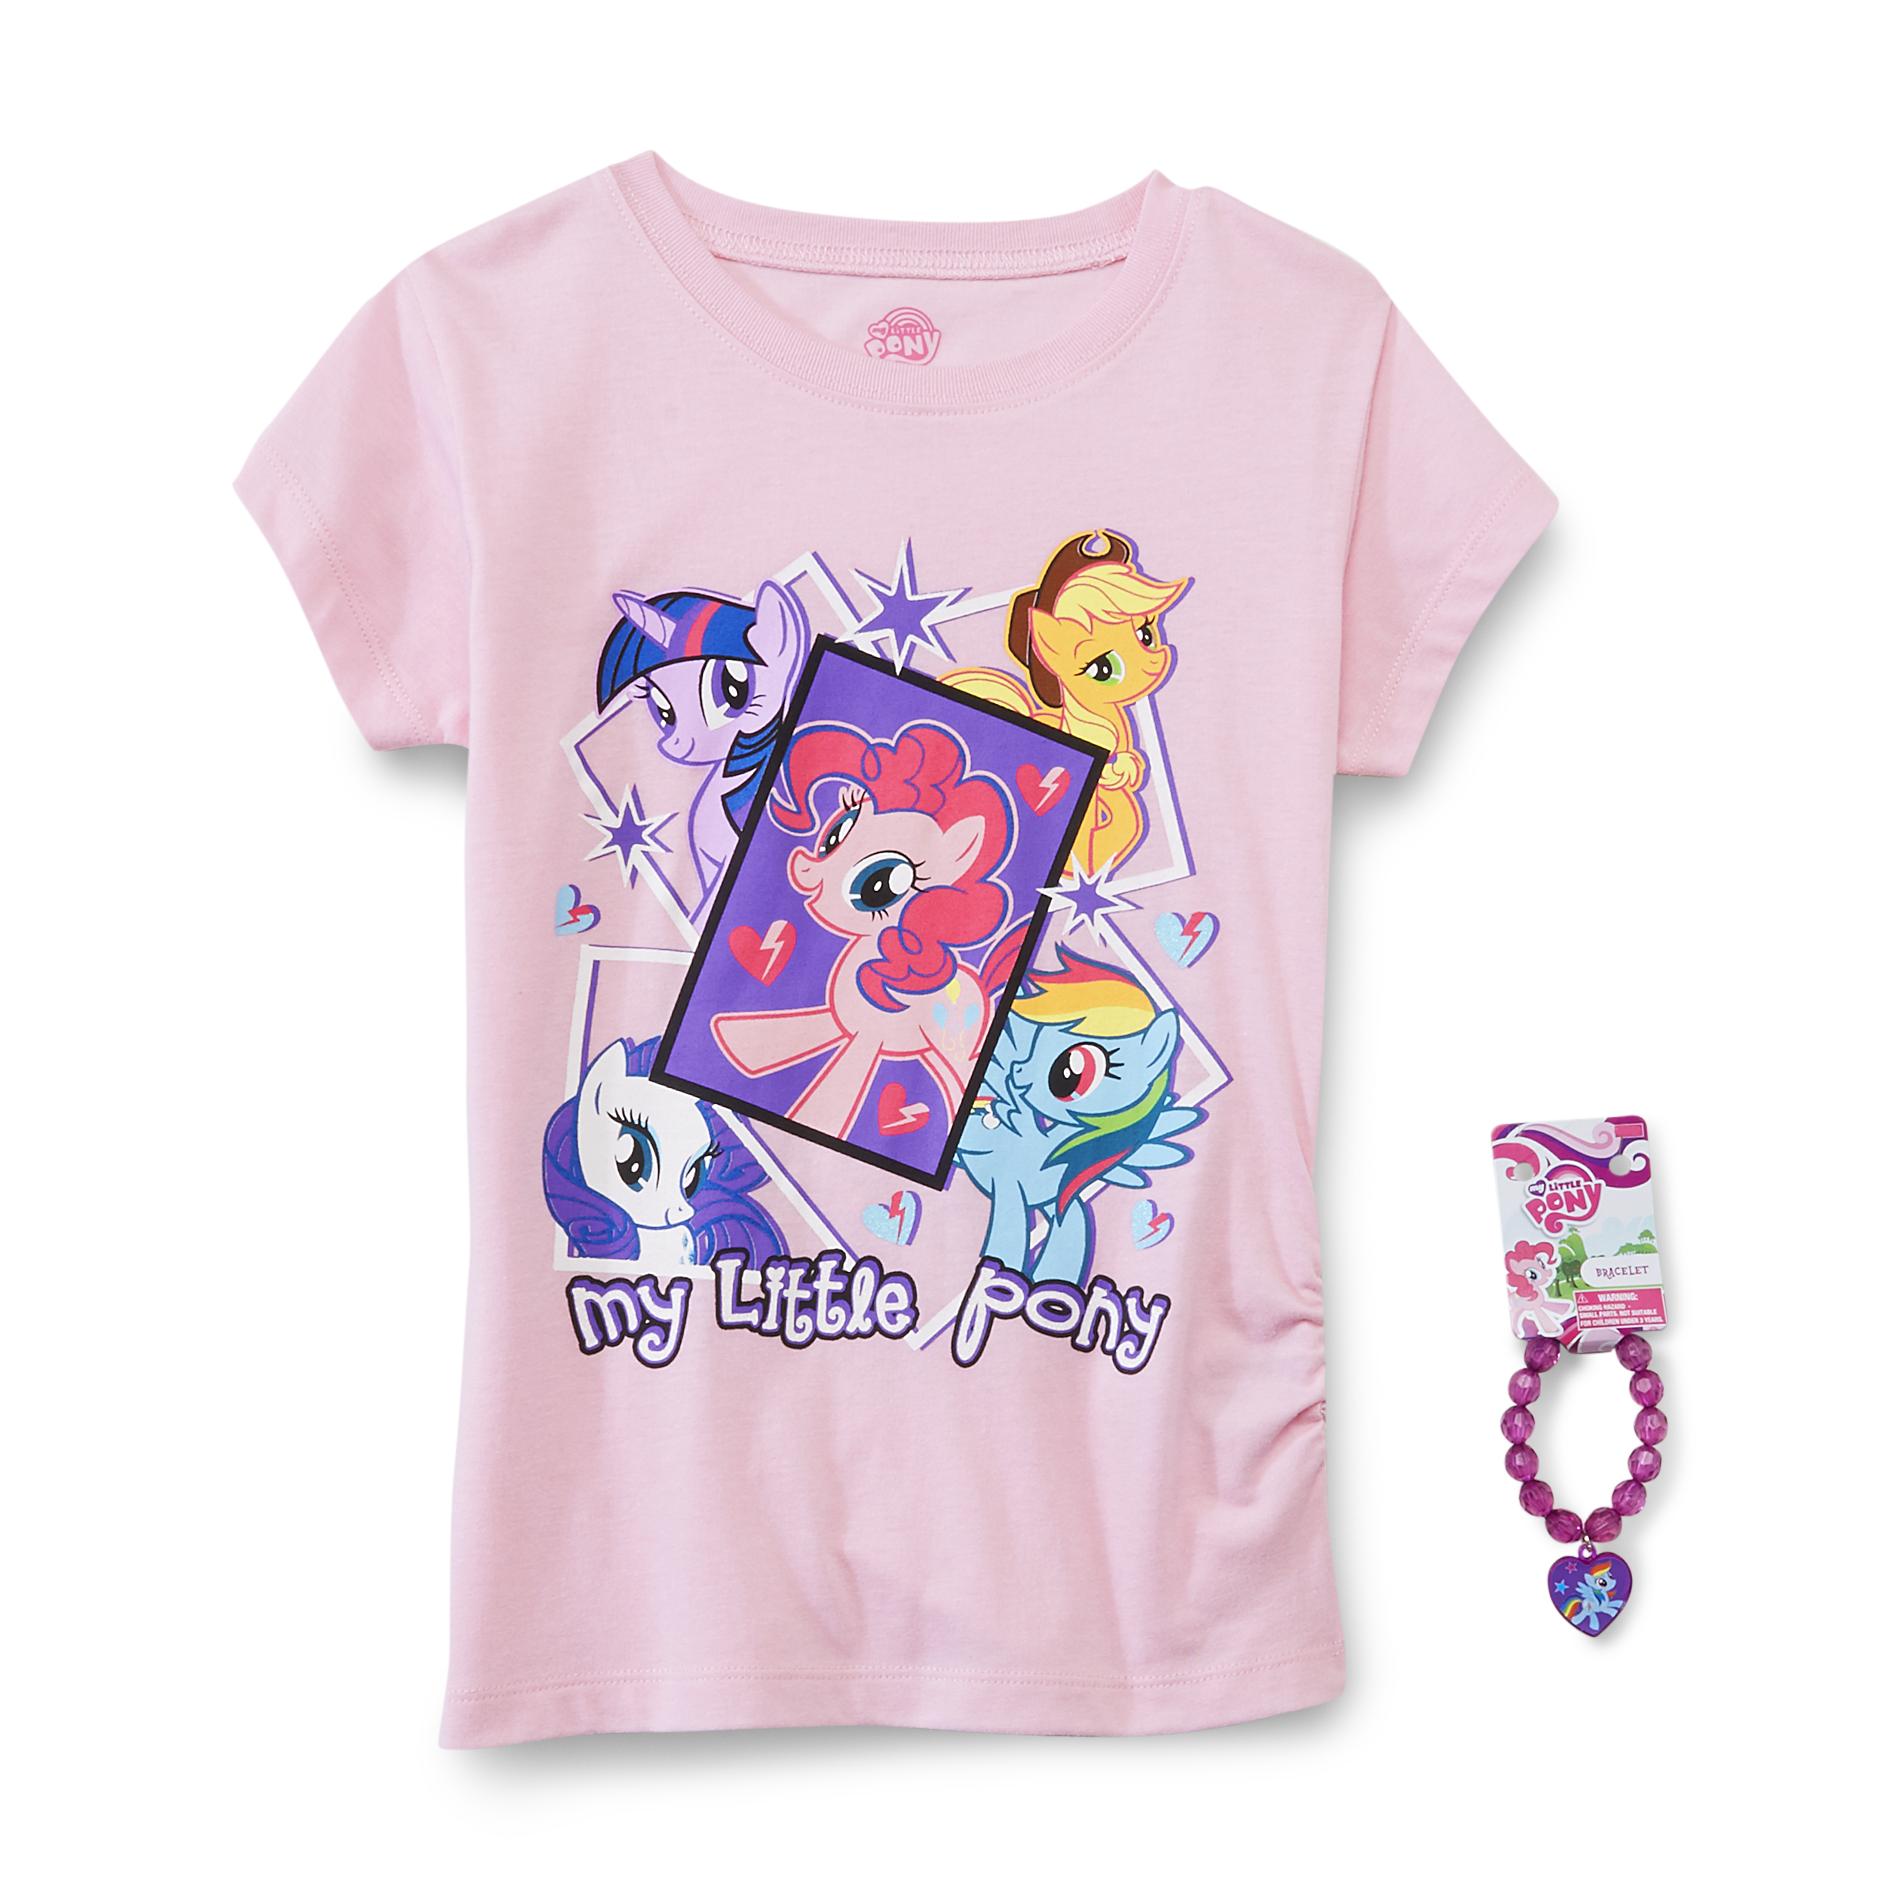 My Little Pony Girl's Graphic T-Shirt & Bracelet